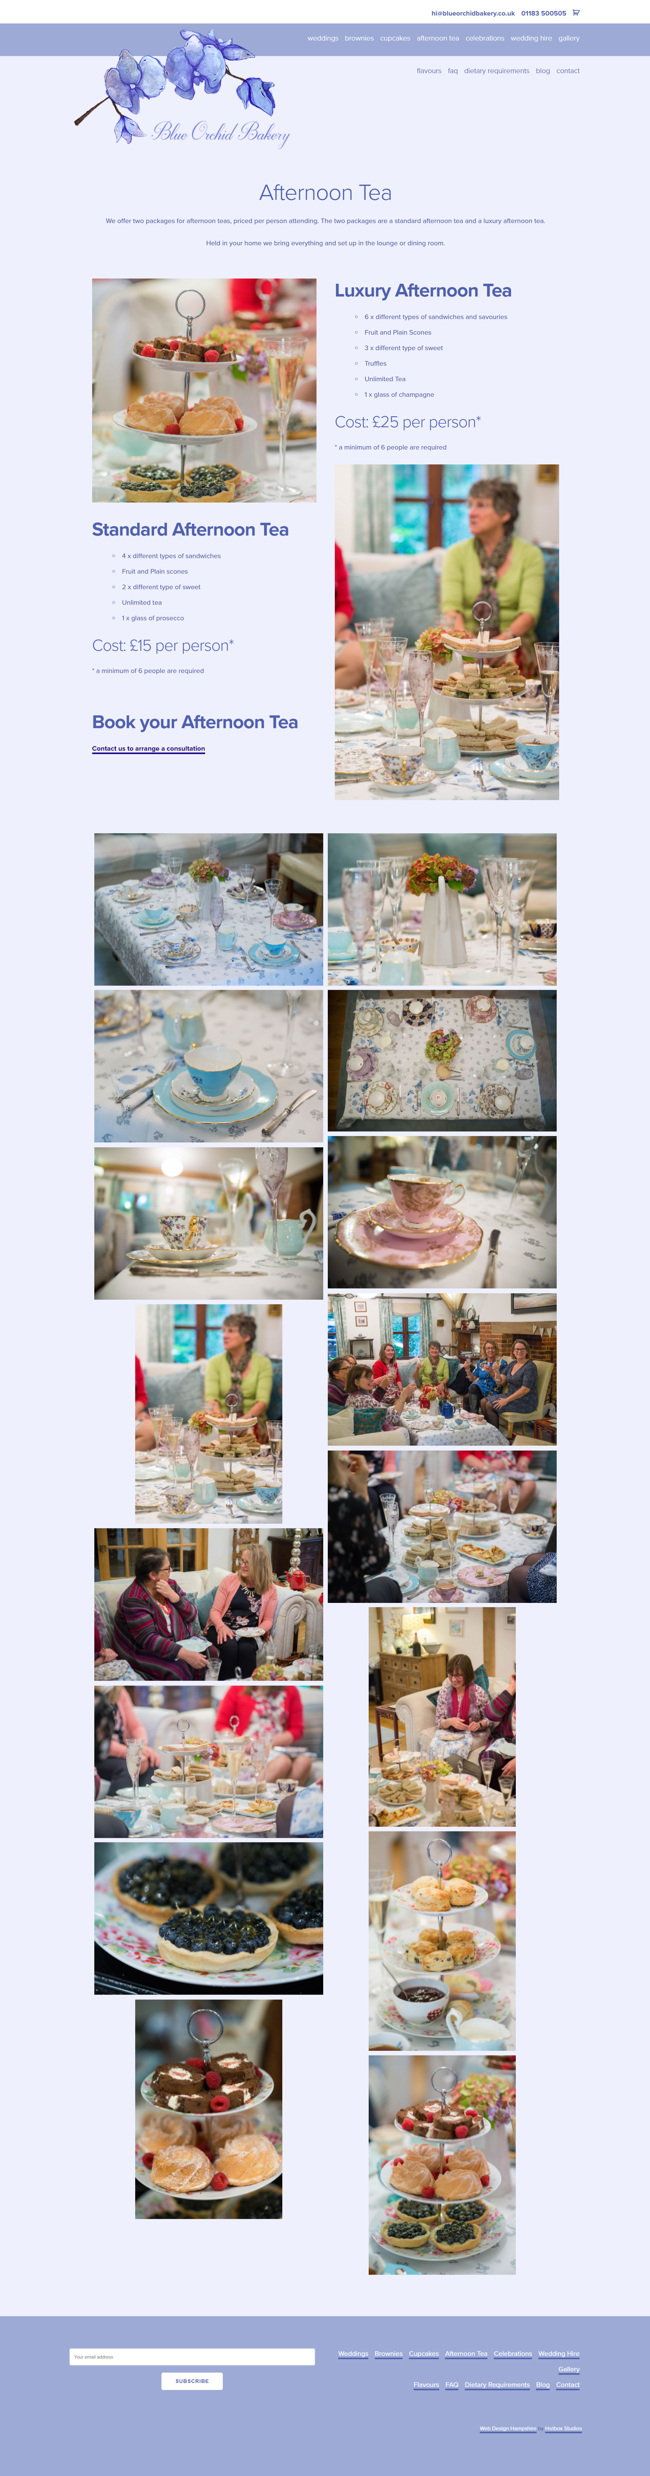 Blue Orchid Bakery Website Design and WordPress Web Development SP008 Afternoon Tea